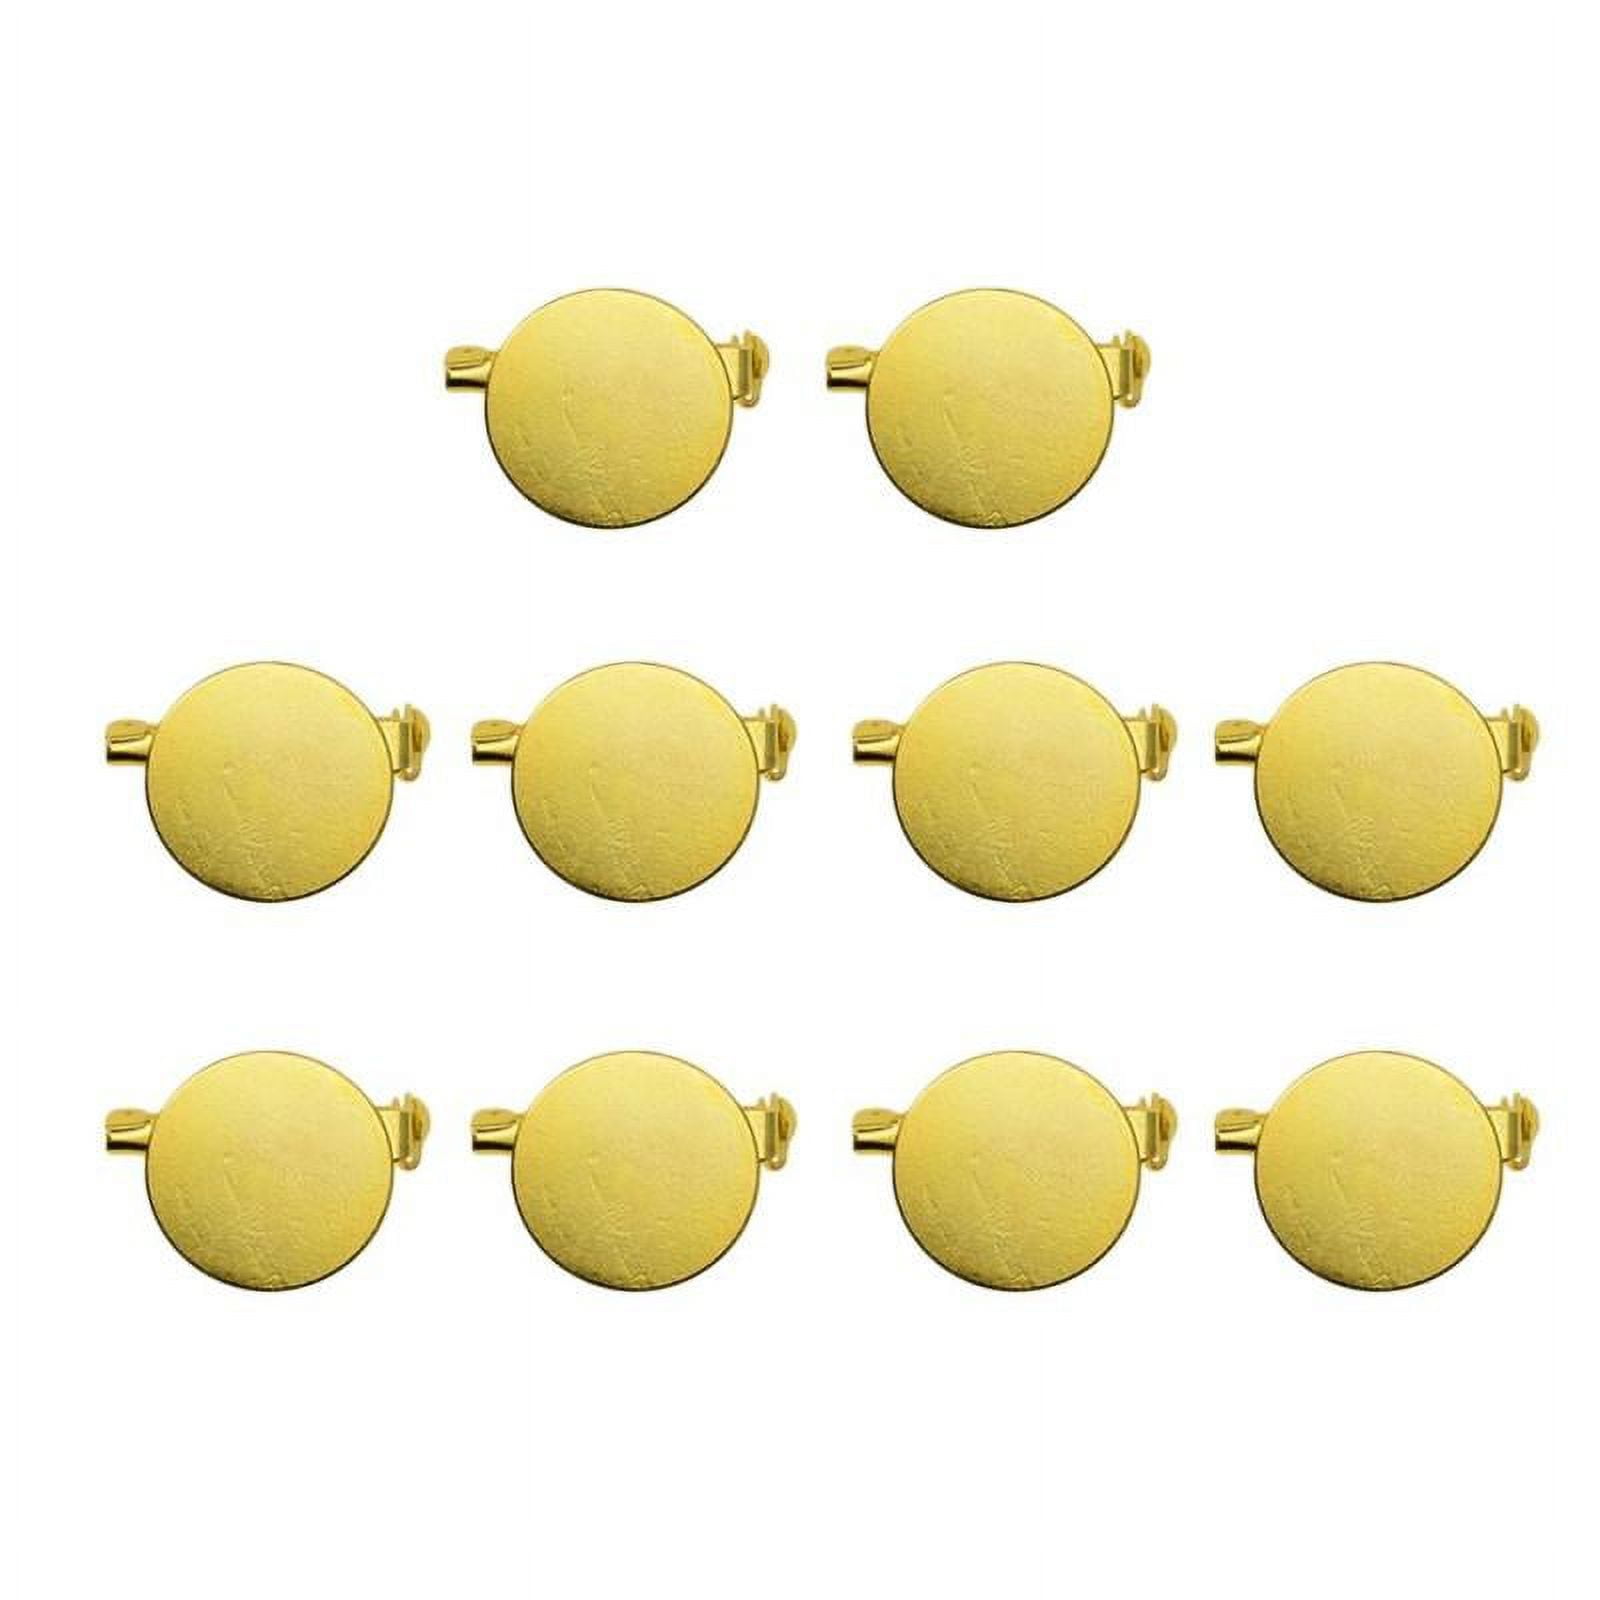 Taylor Seville Magic Pins Applique Yellow